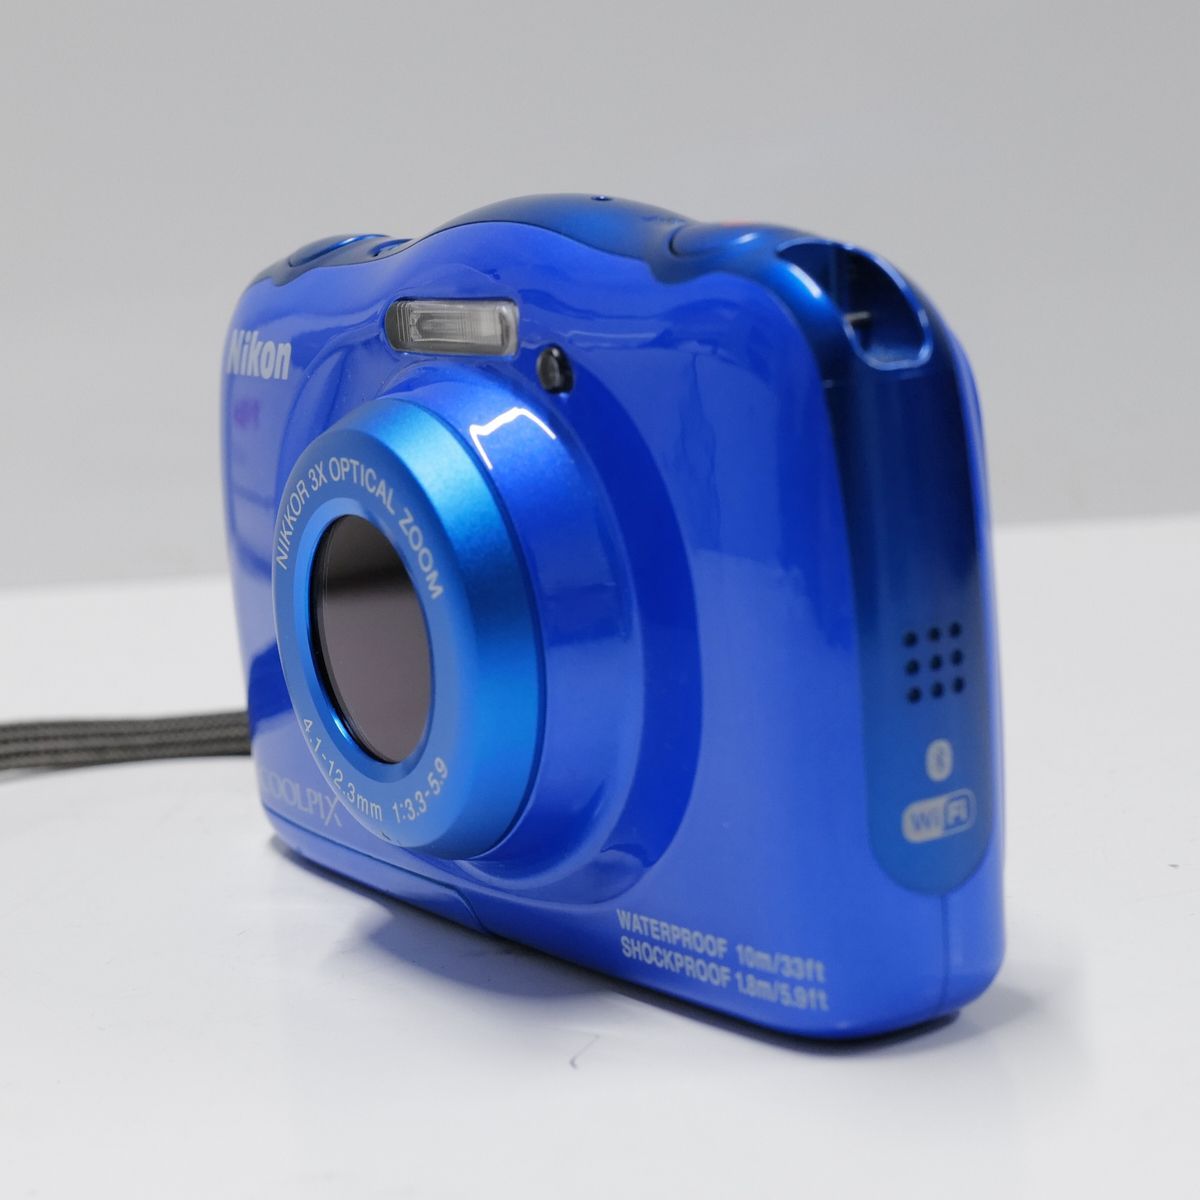 Nikon COOLPIX W150 USEDデジタルカメラ 本体+バッテリー27型TFT液晶